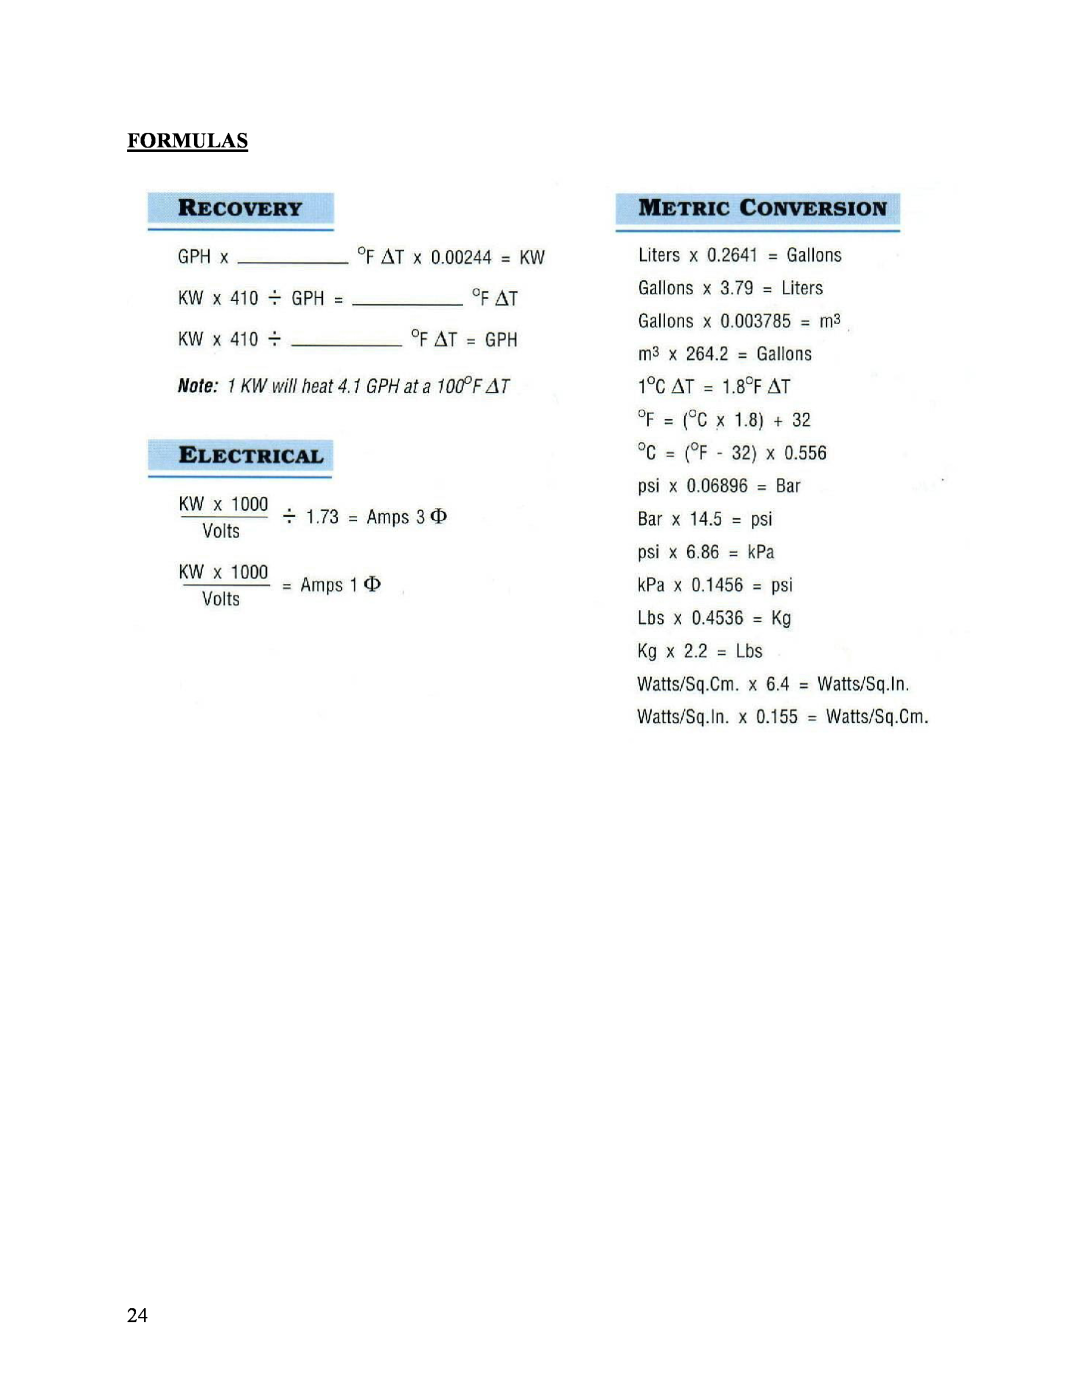 Hubbell CR manual Formulas 